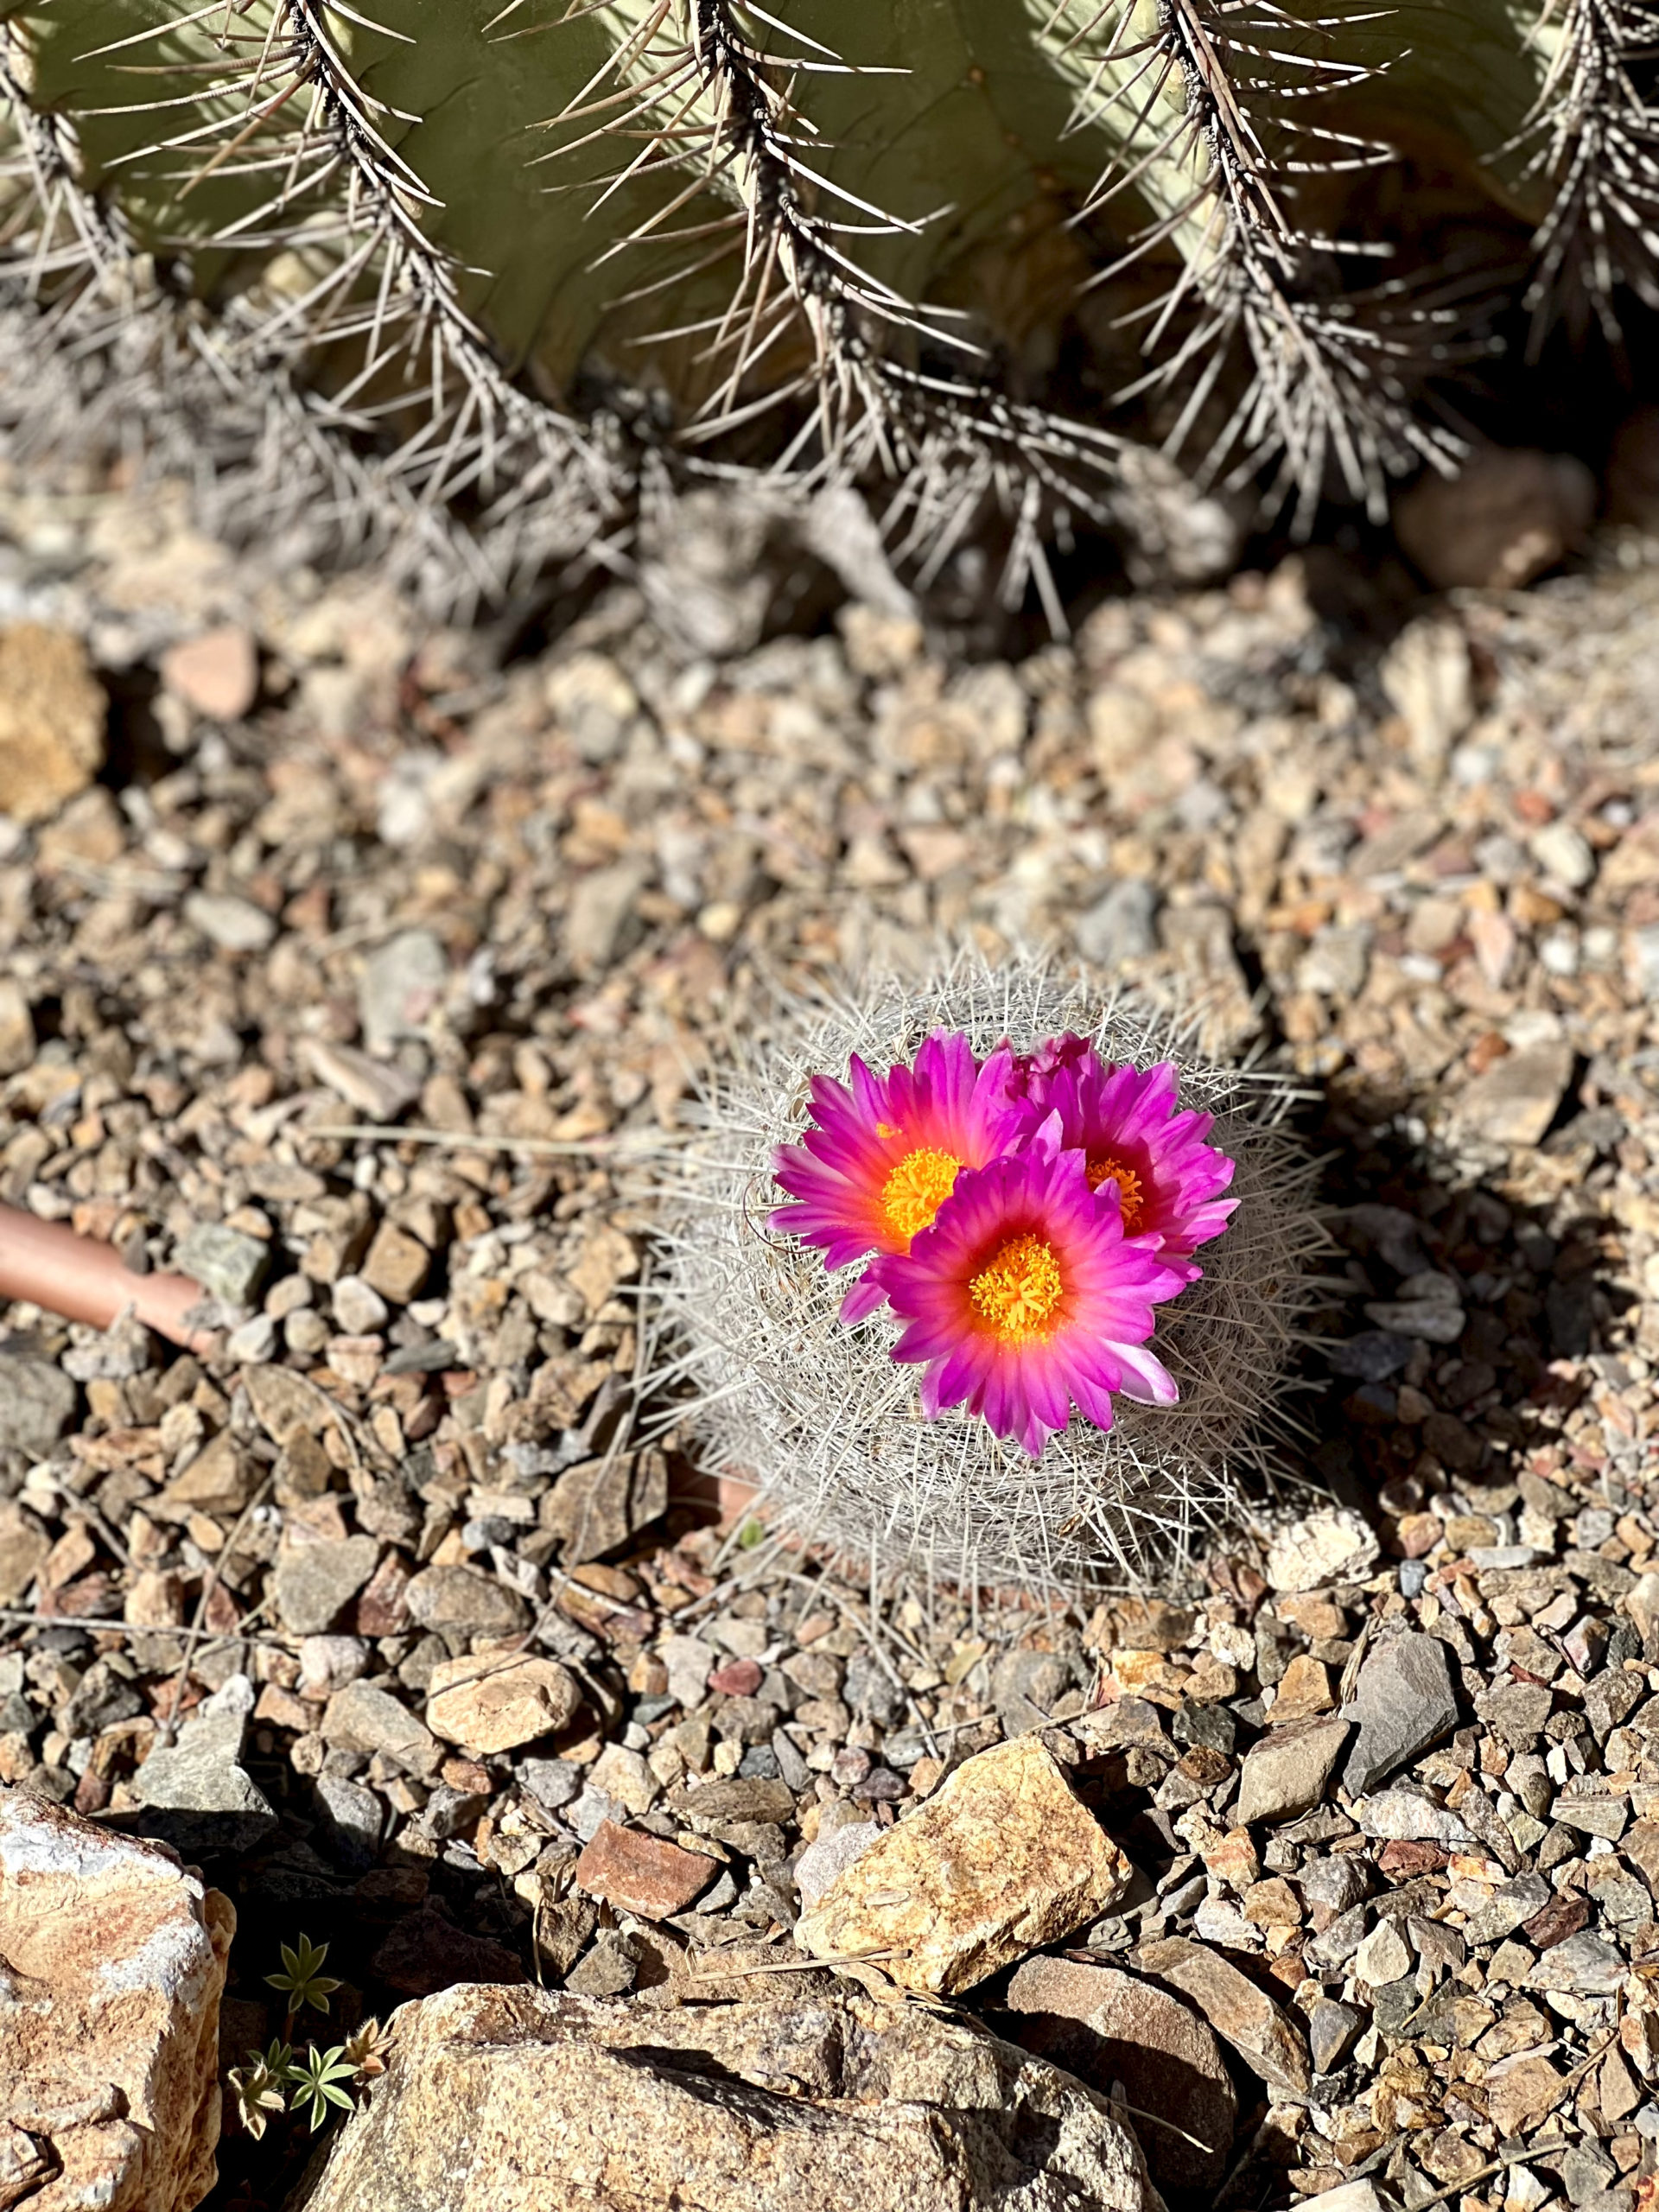 barrel cactus in bloom